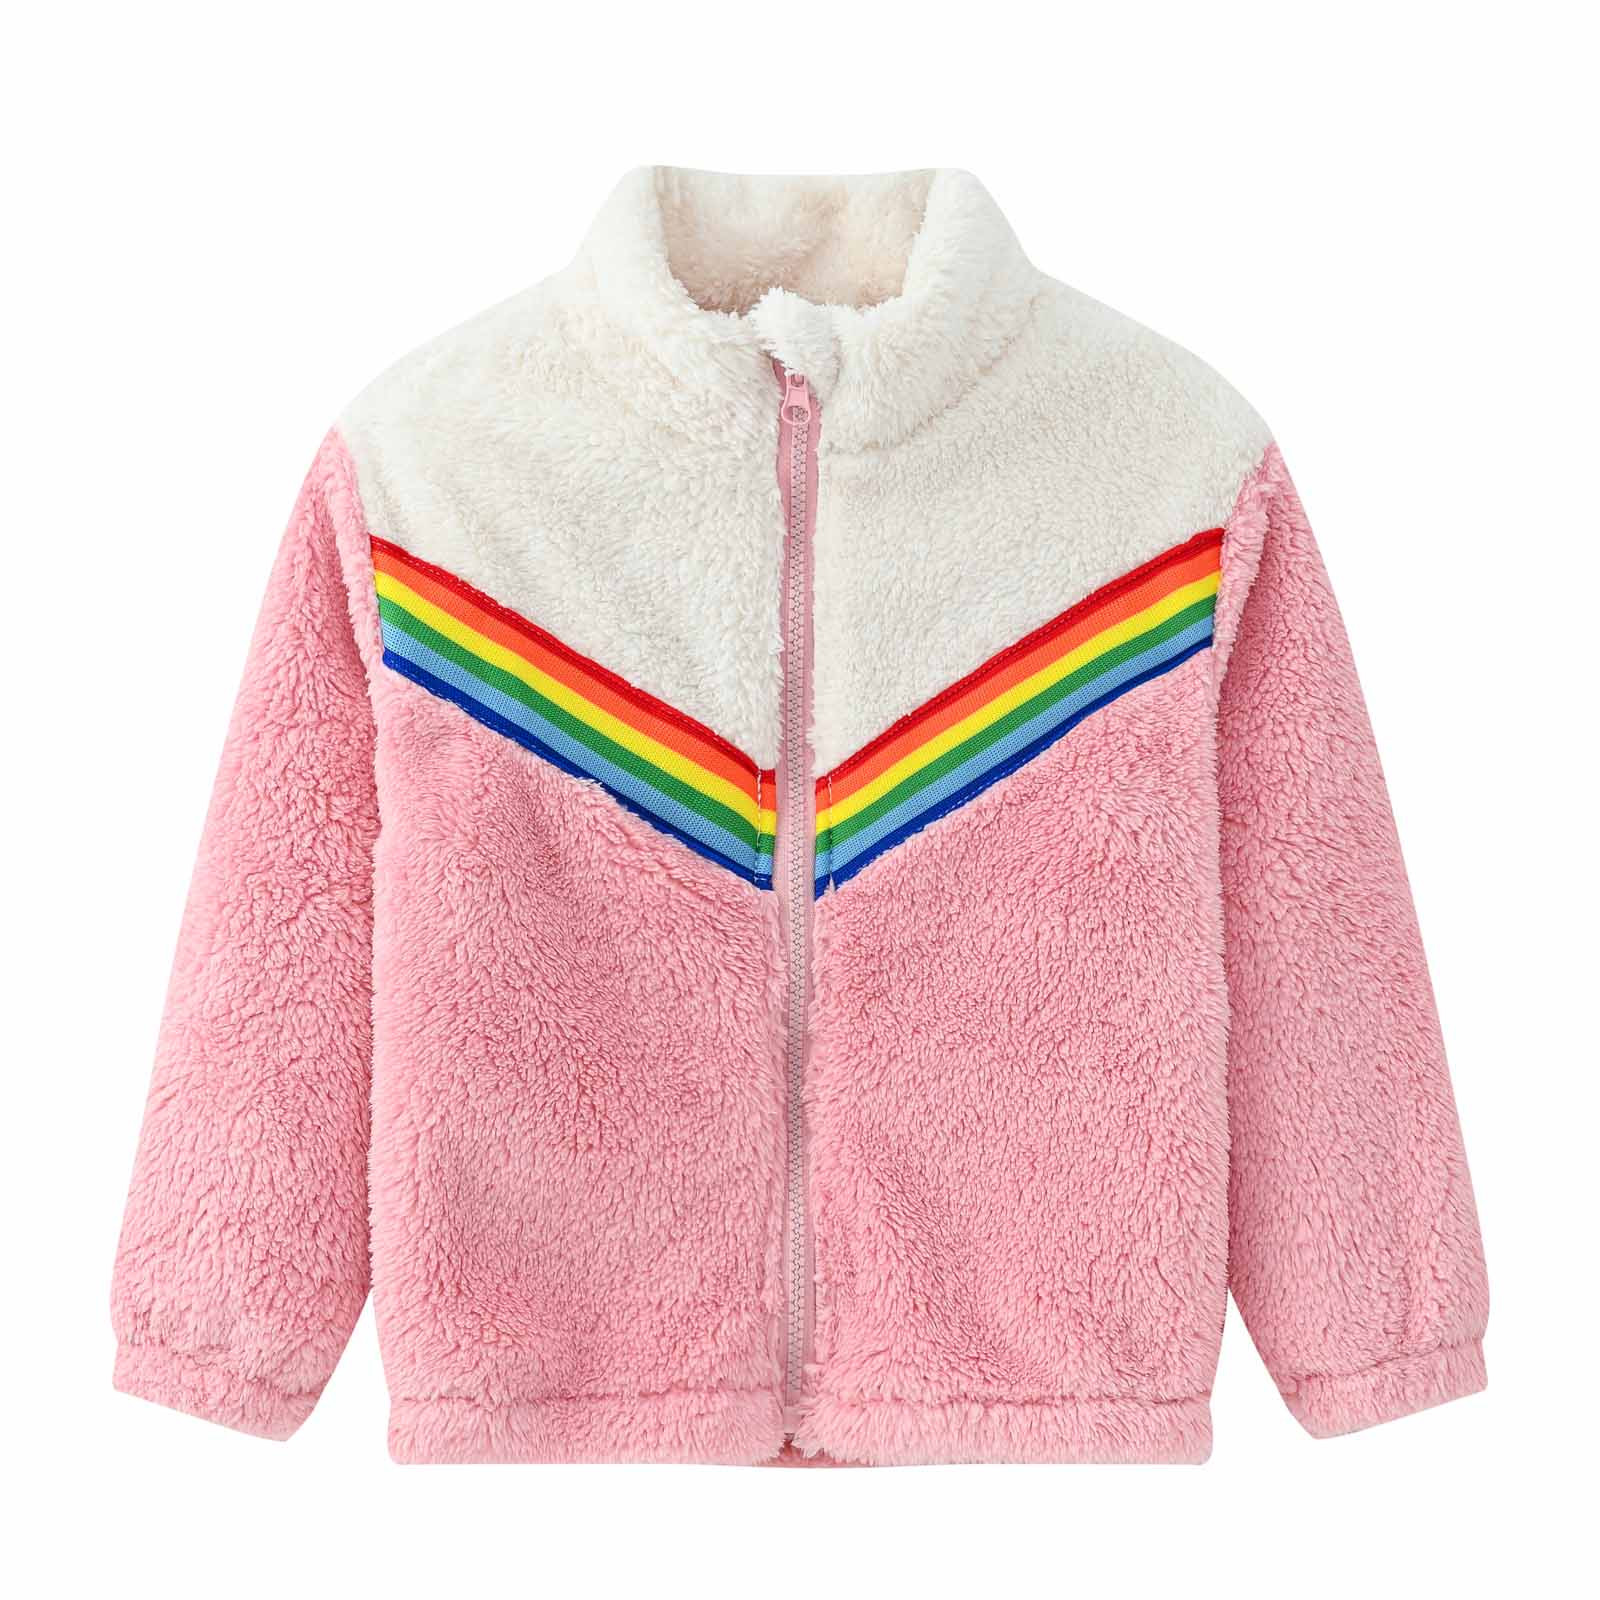 YYDGH Girls Zipper Jacket Fuzzy Sweatshirt Long Sleeve Casual Cozy Fleece Sherpa Outwear Coat Full-Zip Rainbow Jackets(Pink,5-6 Years) - image 1 of 8